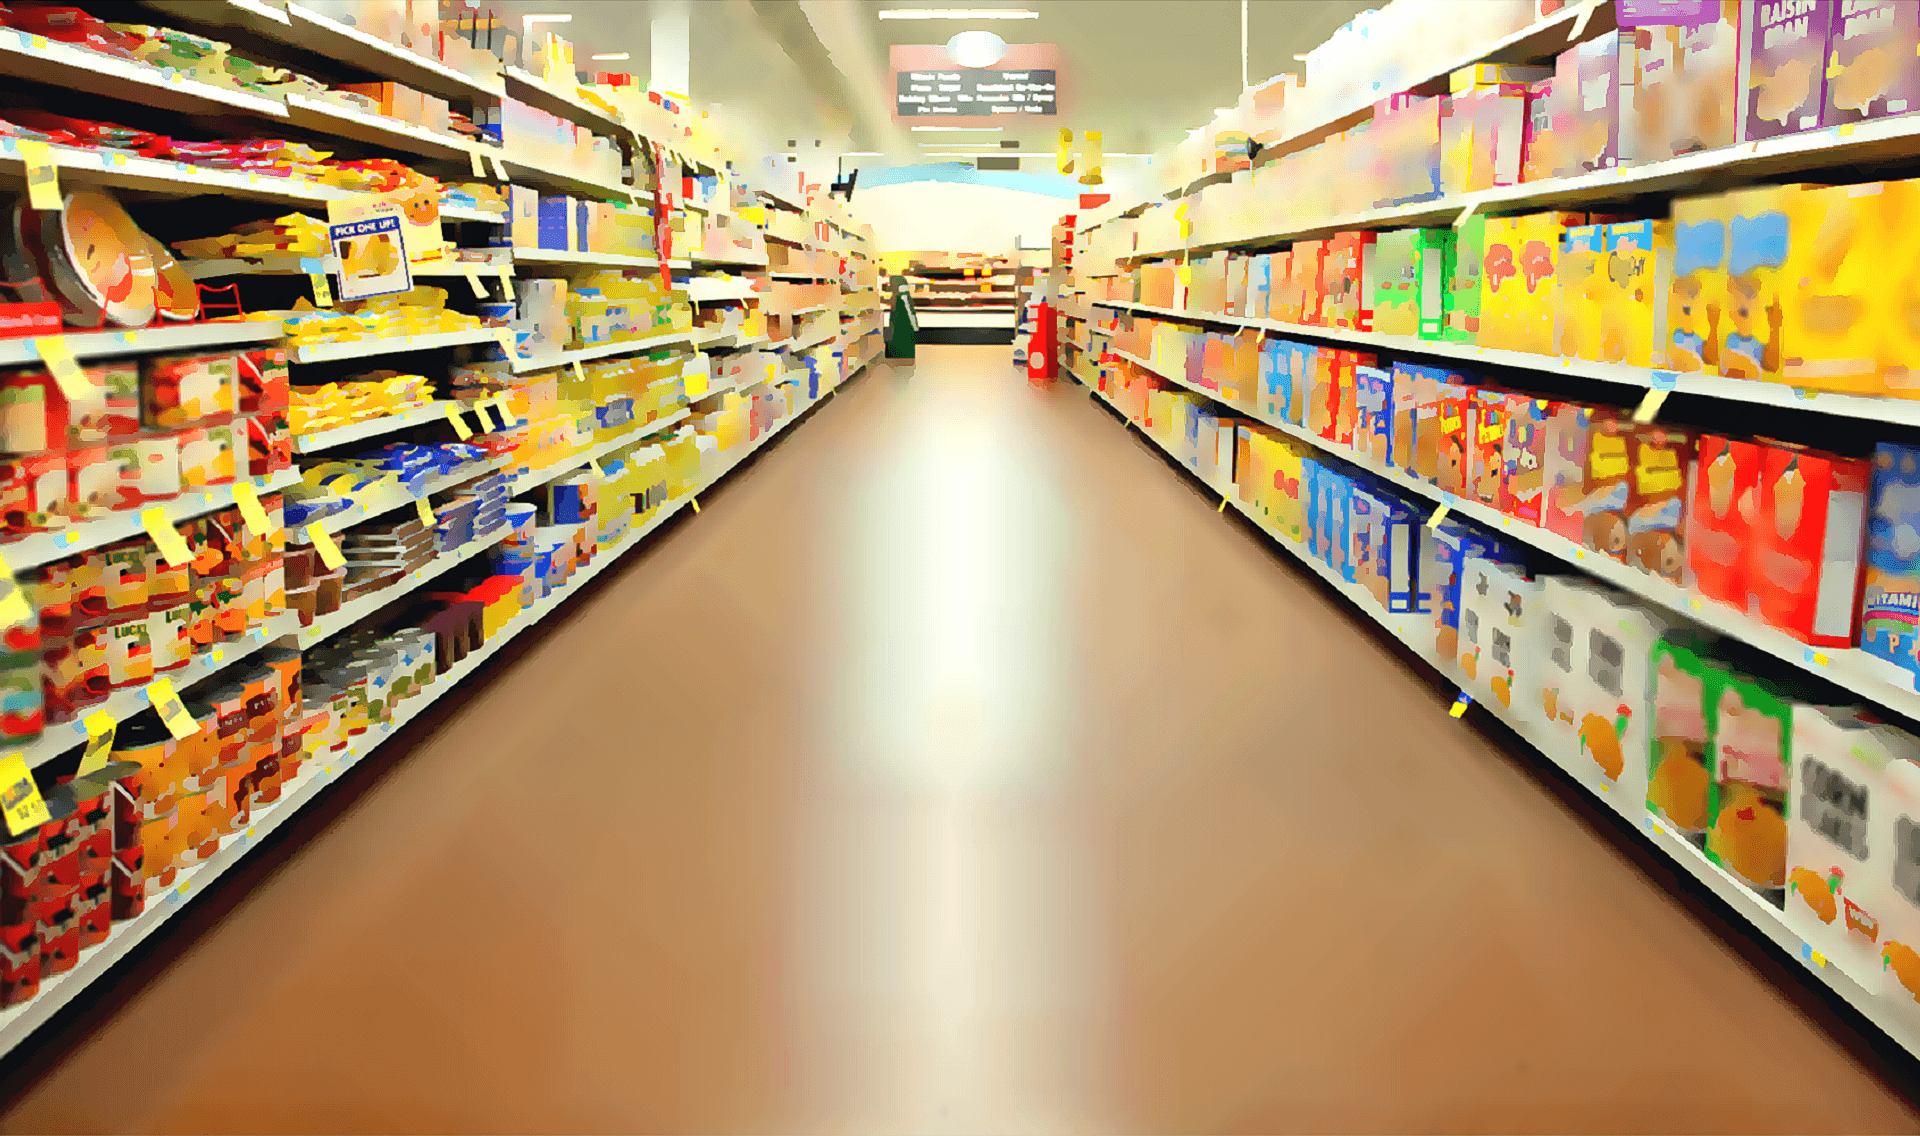 Supermarket Wallpaper. Supermarket Wallpaper, Supermarket Shopping Background and Supermarket Shelves Wallpaper